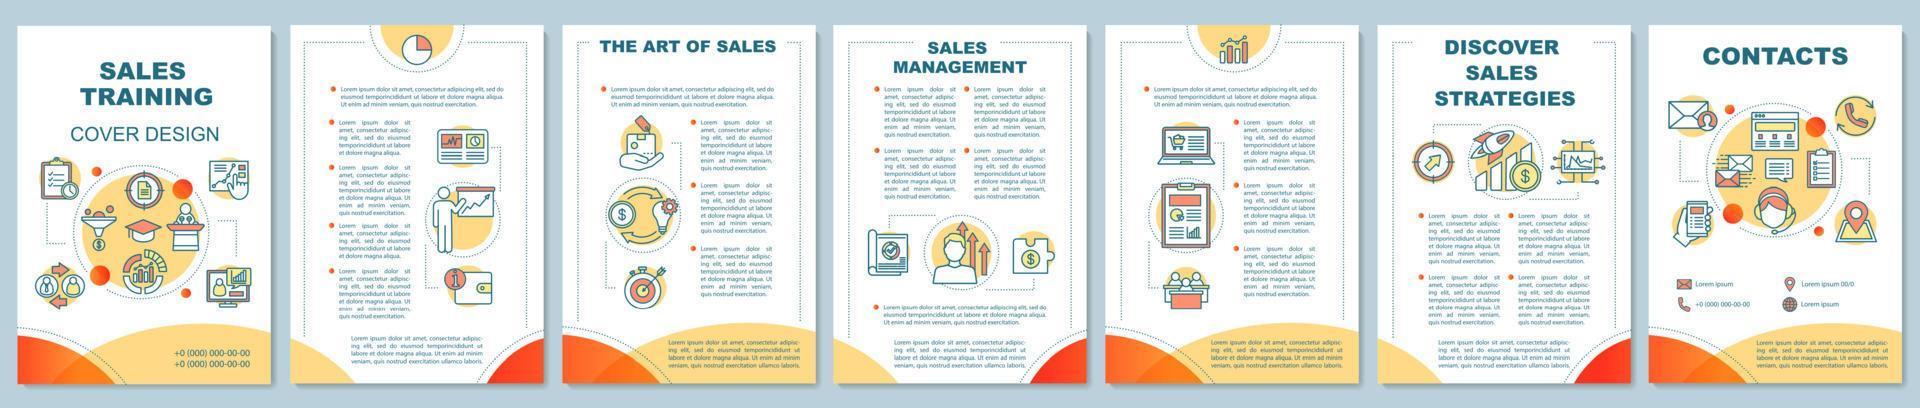 Sales skills training brochure template vector